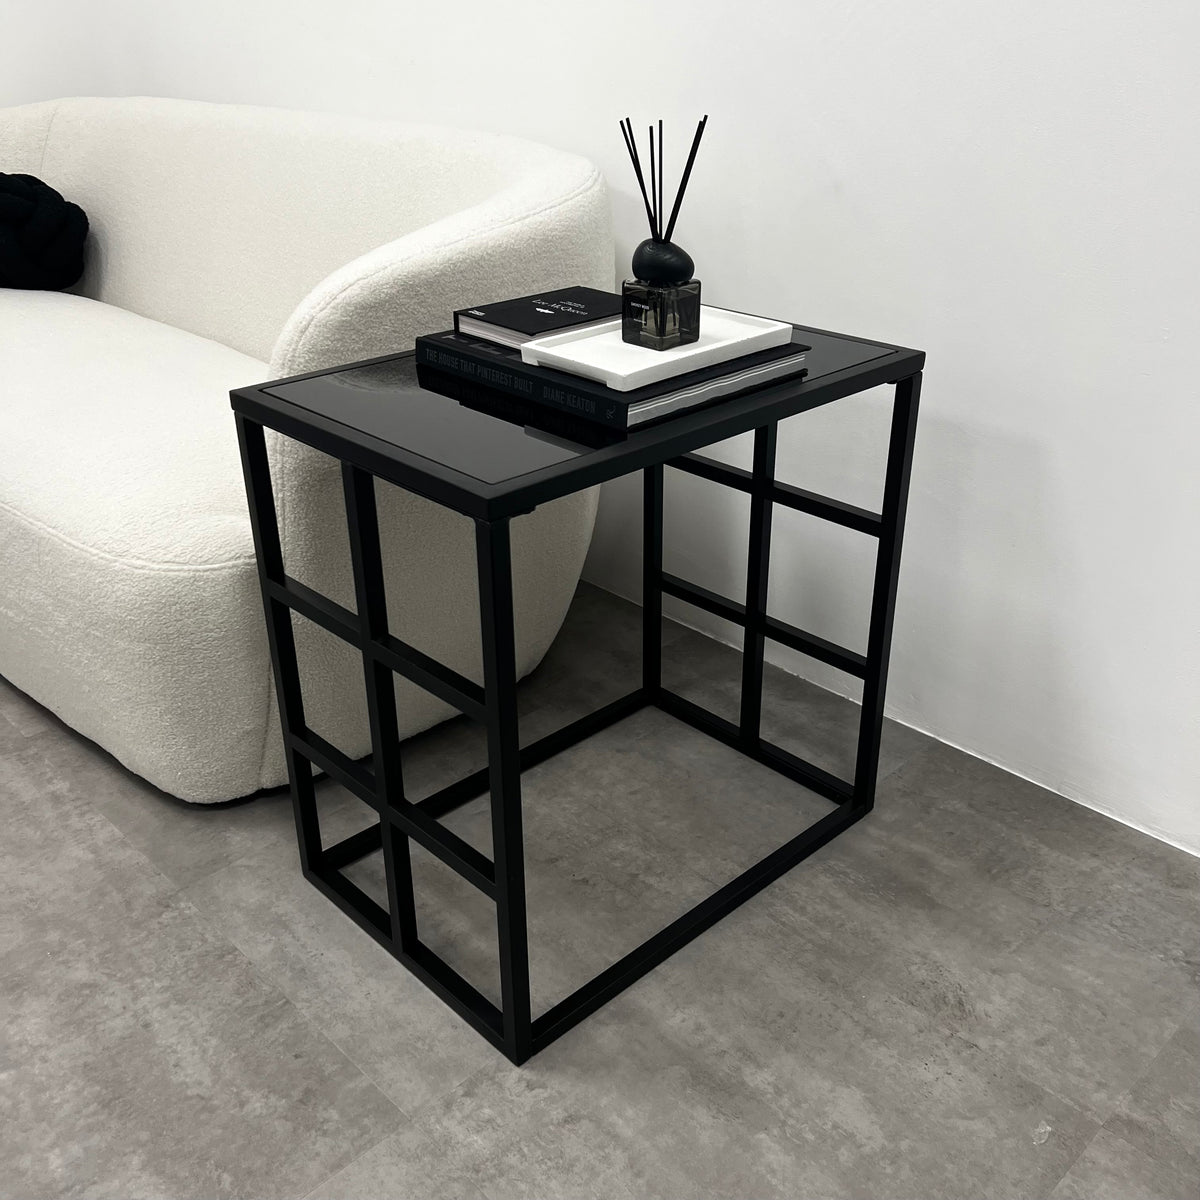 Brooklyn - Table d'appoint rectangulaire moderne avec miroir teinté noir